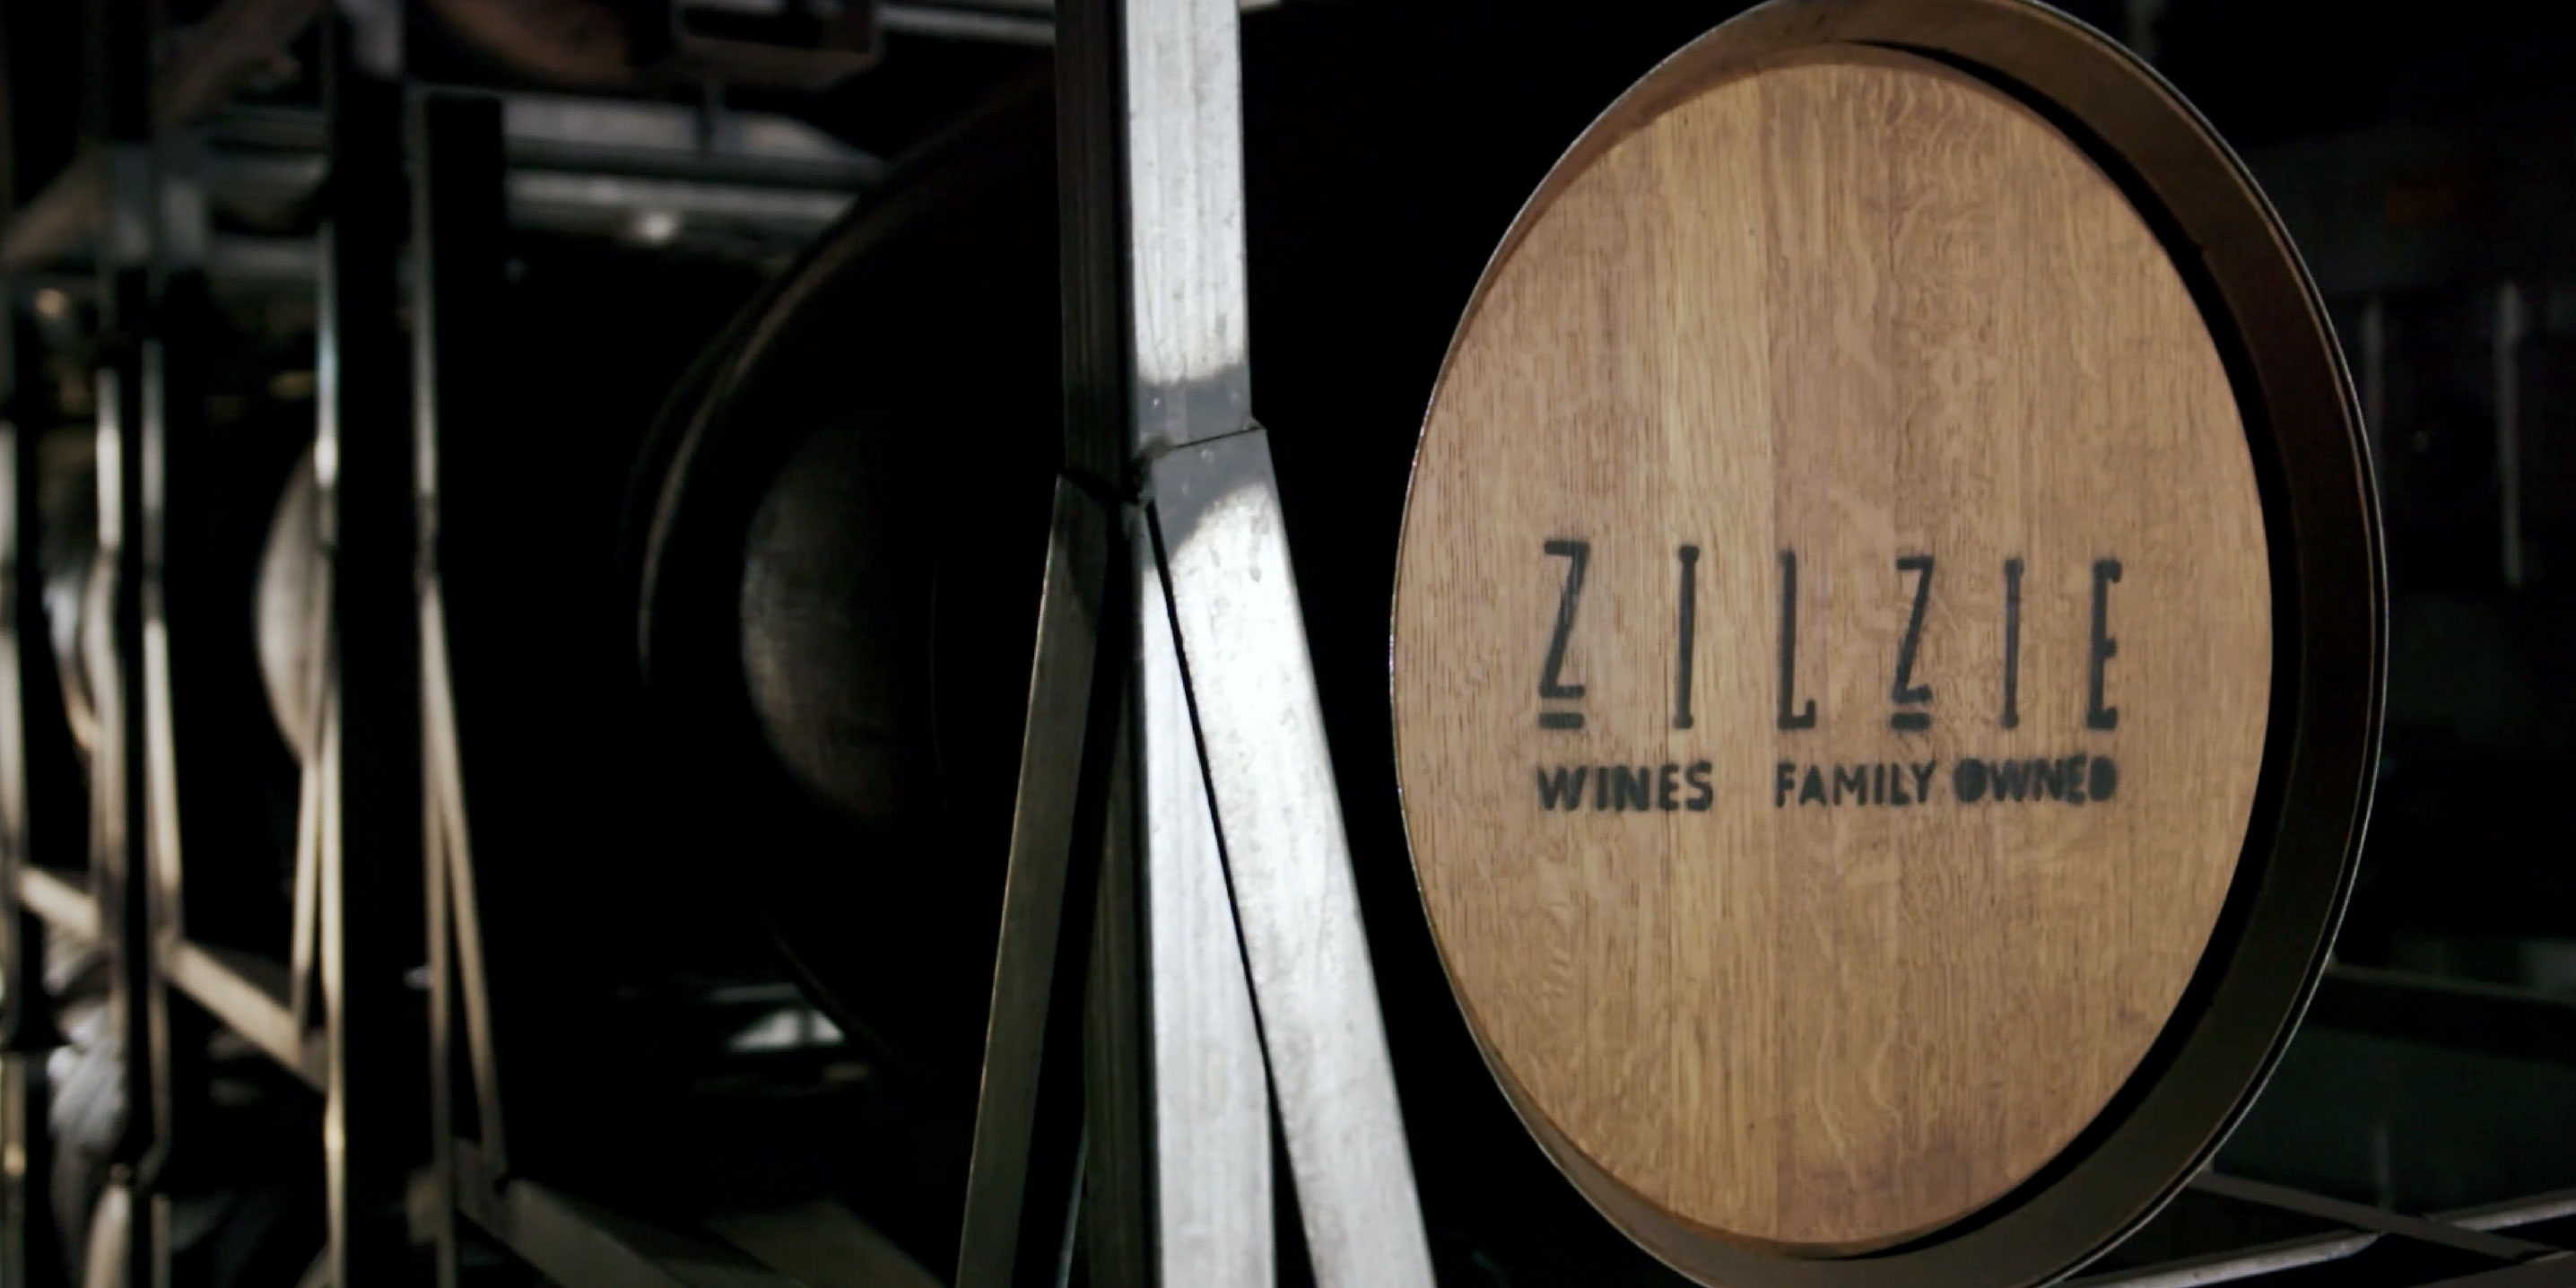 Zilzie Wine barrel